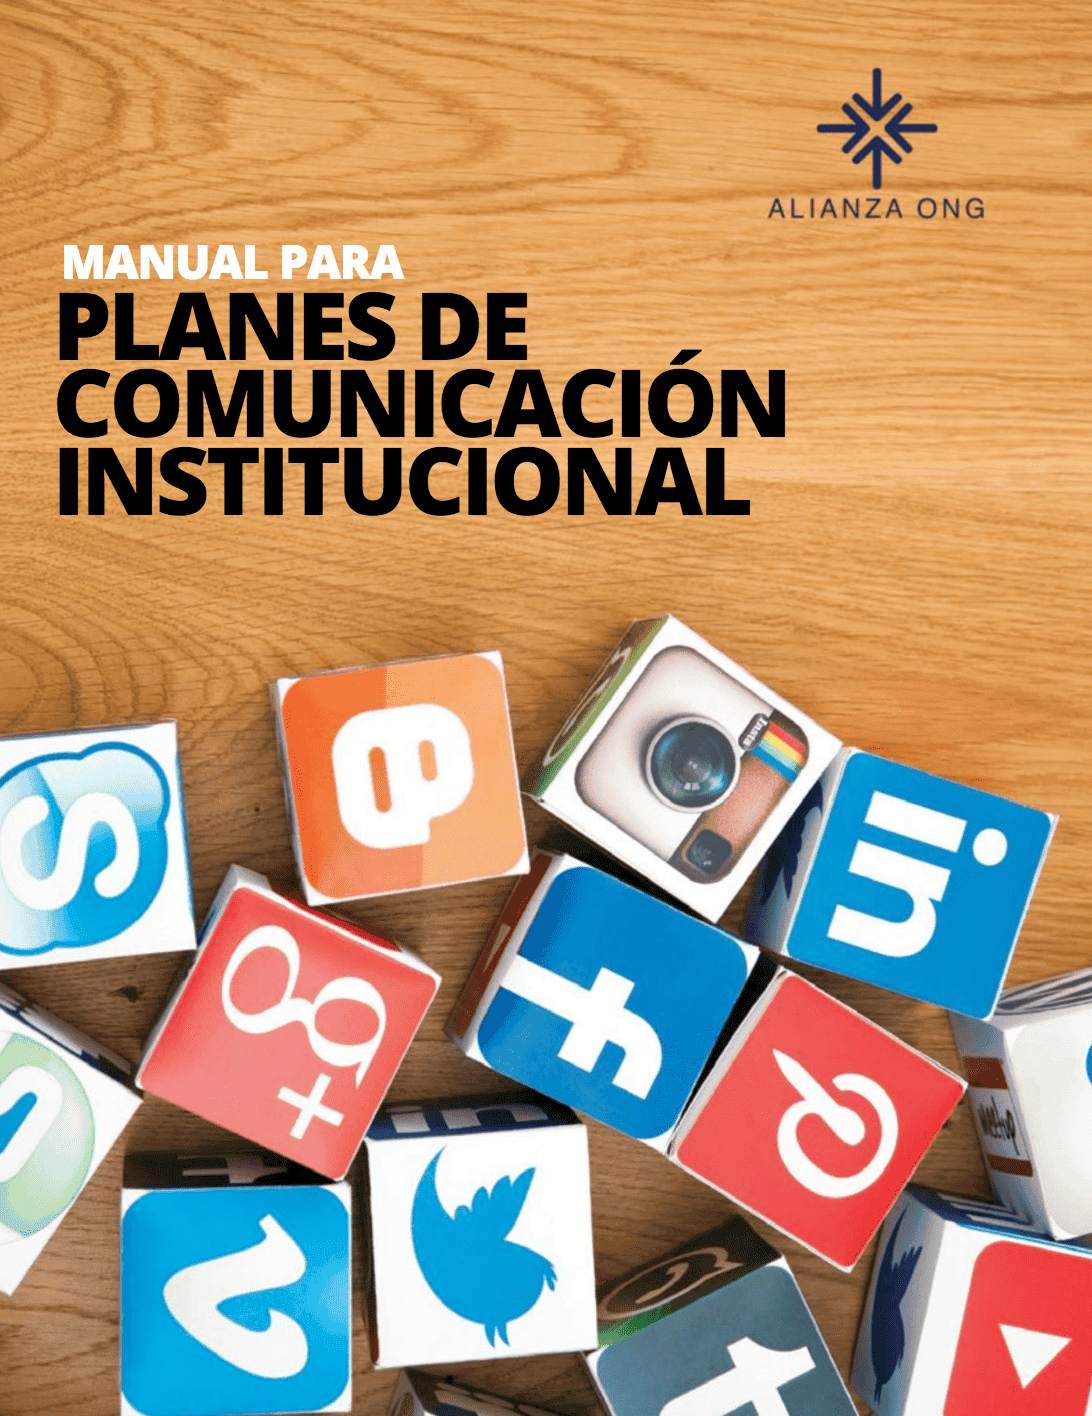 Un manual para elaborar planes de Comunicación Institucional